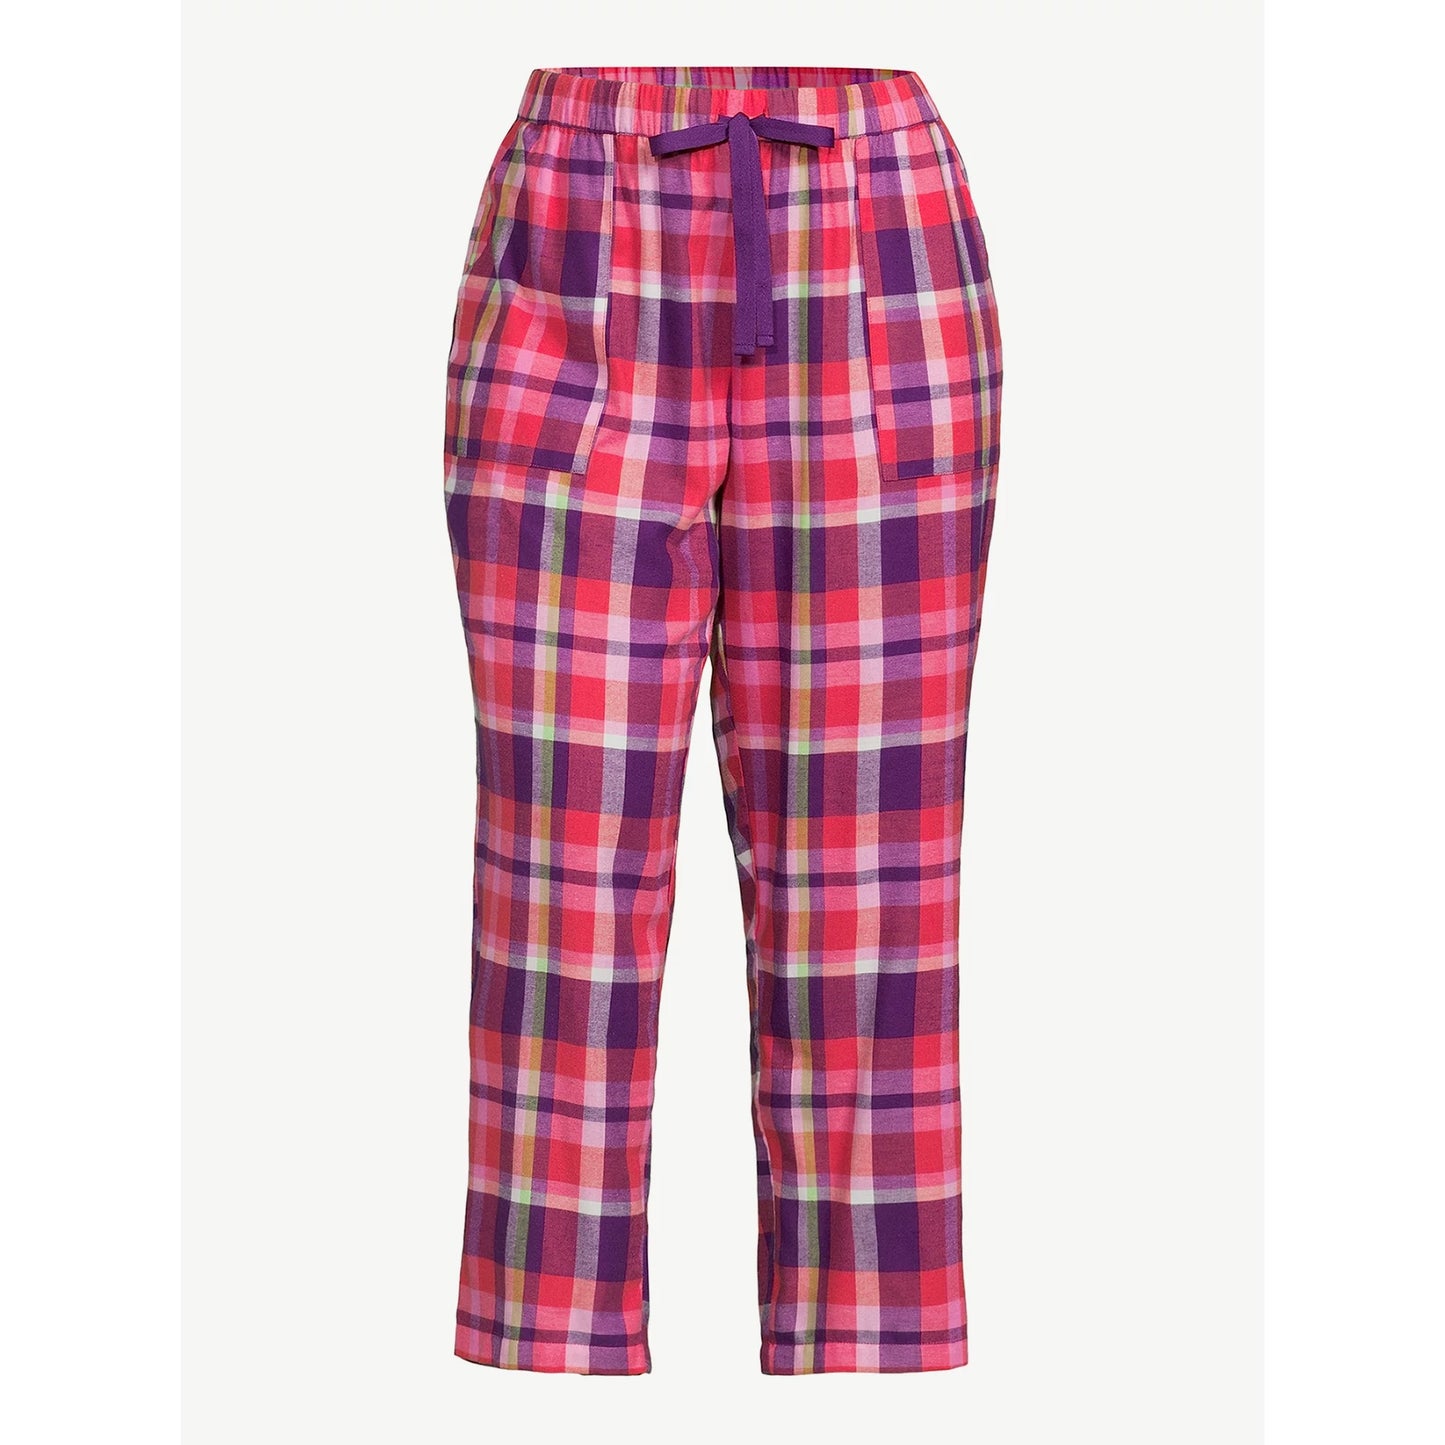 Joyspun Women's Print Flannel Sleep Pants